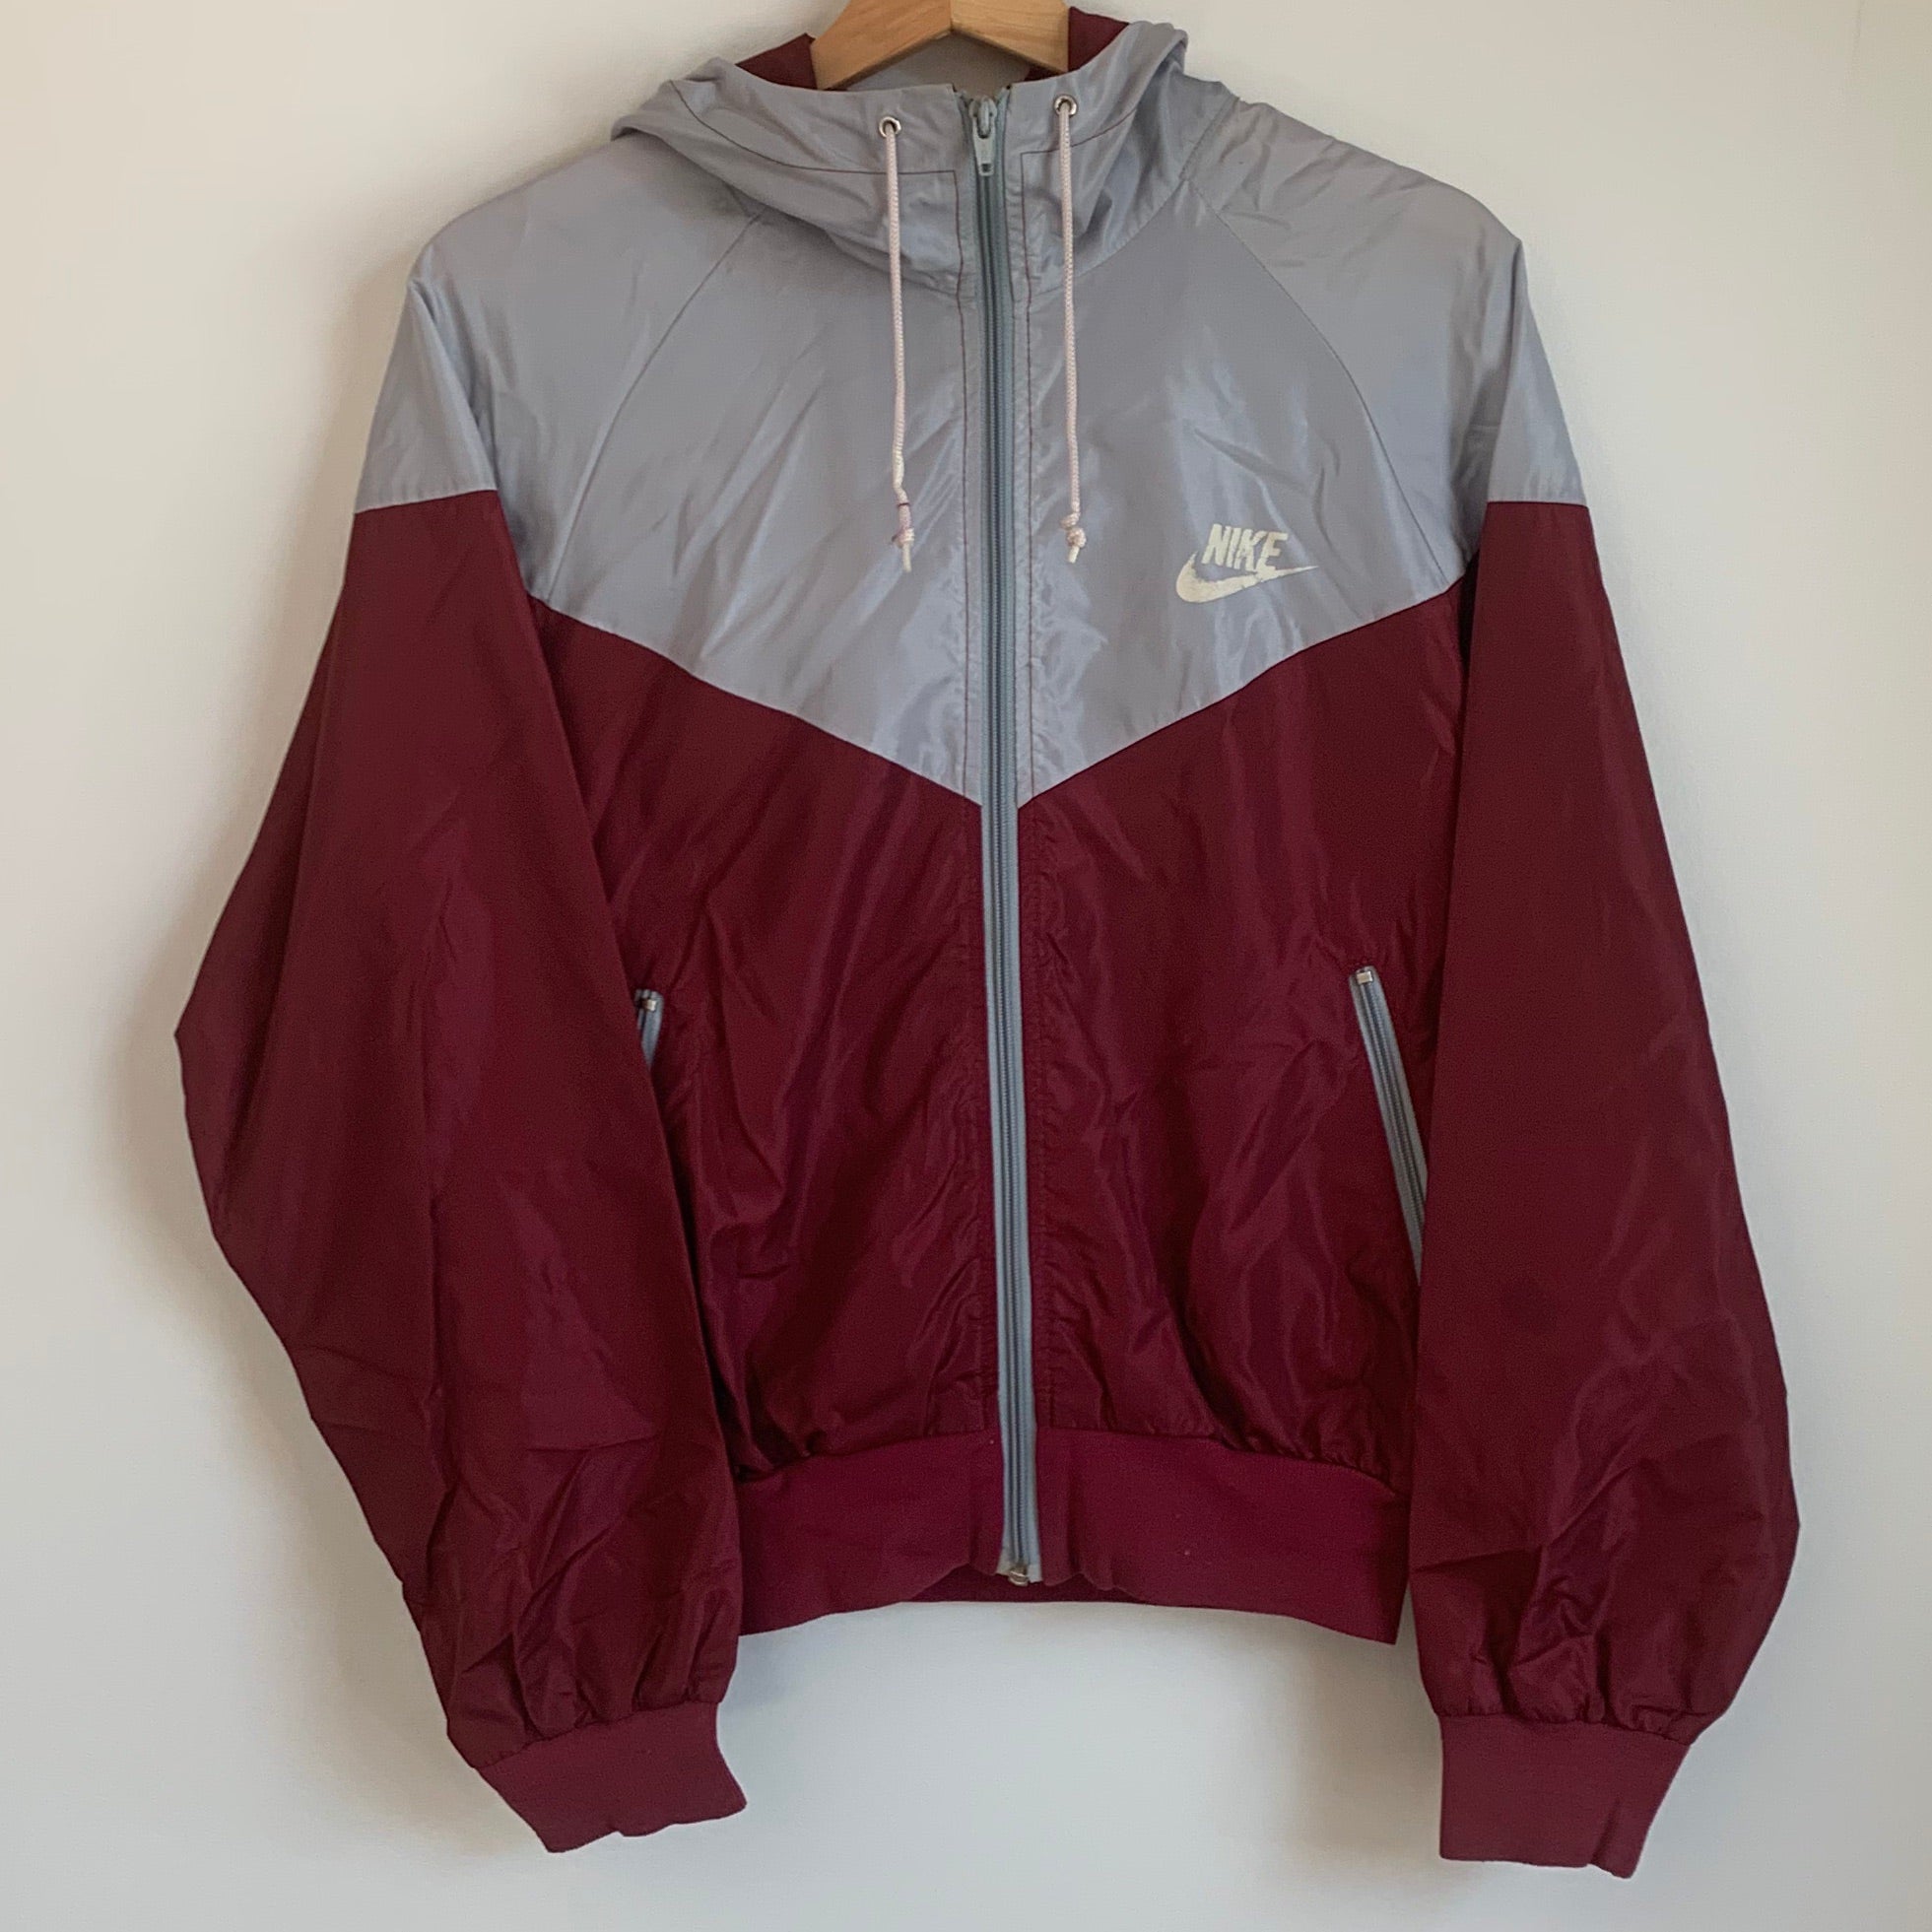 Nike Gray/Maroon Windbreaker Jacket 